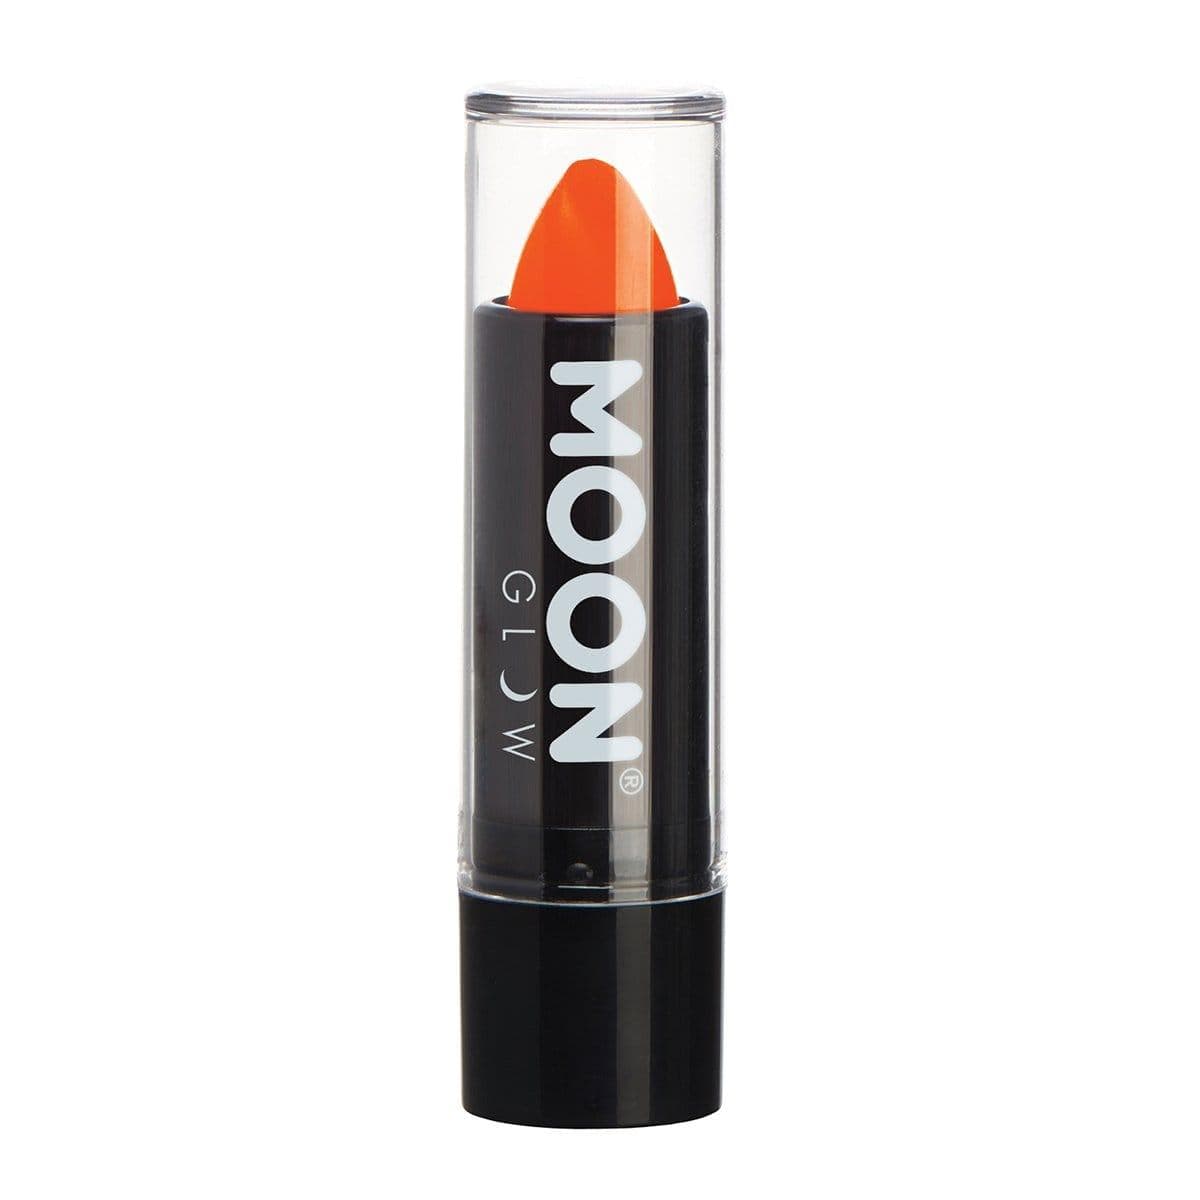 Buy Costume Accessories Moon orange neon UV lipstick sold at Party Expert